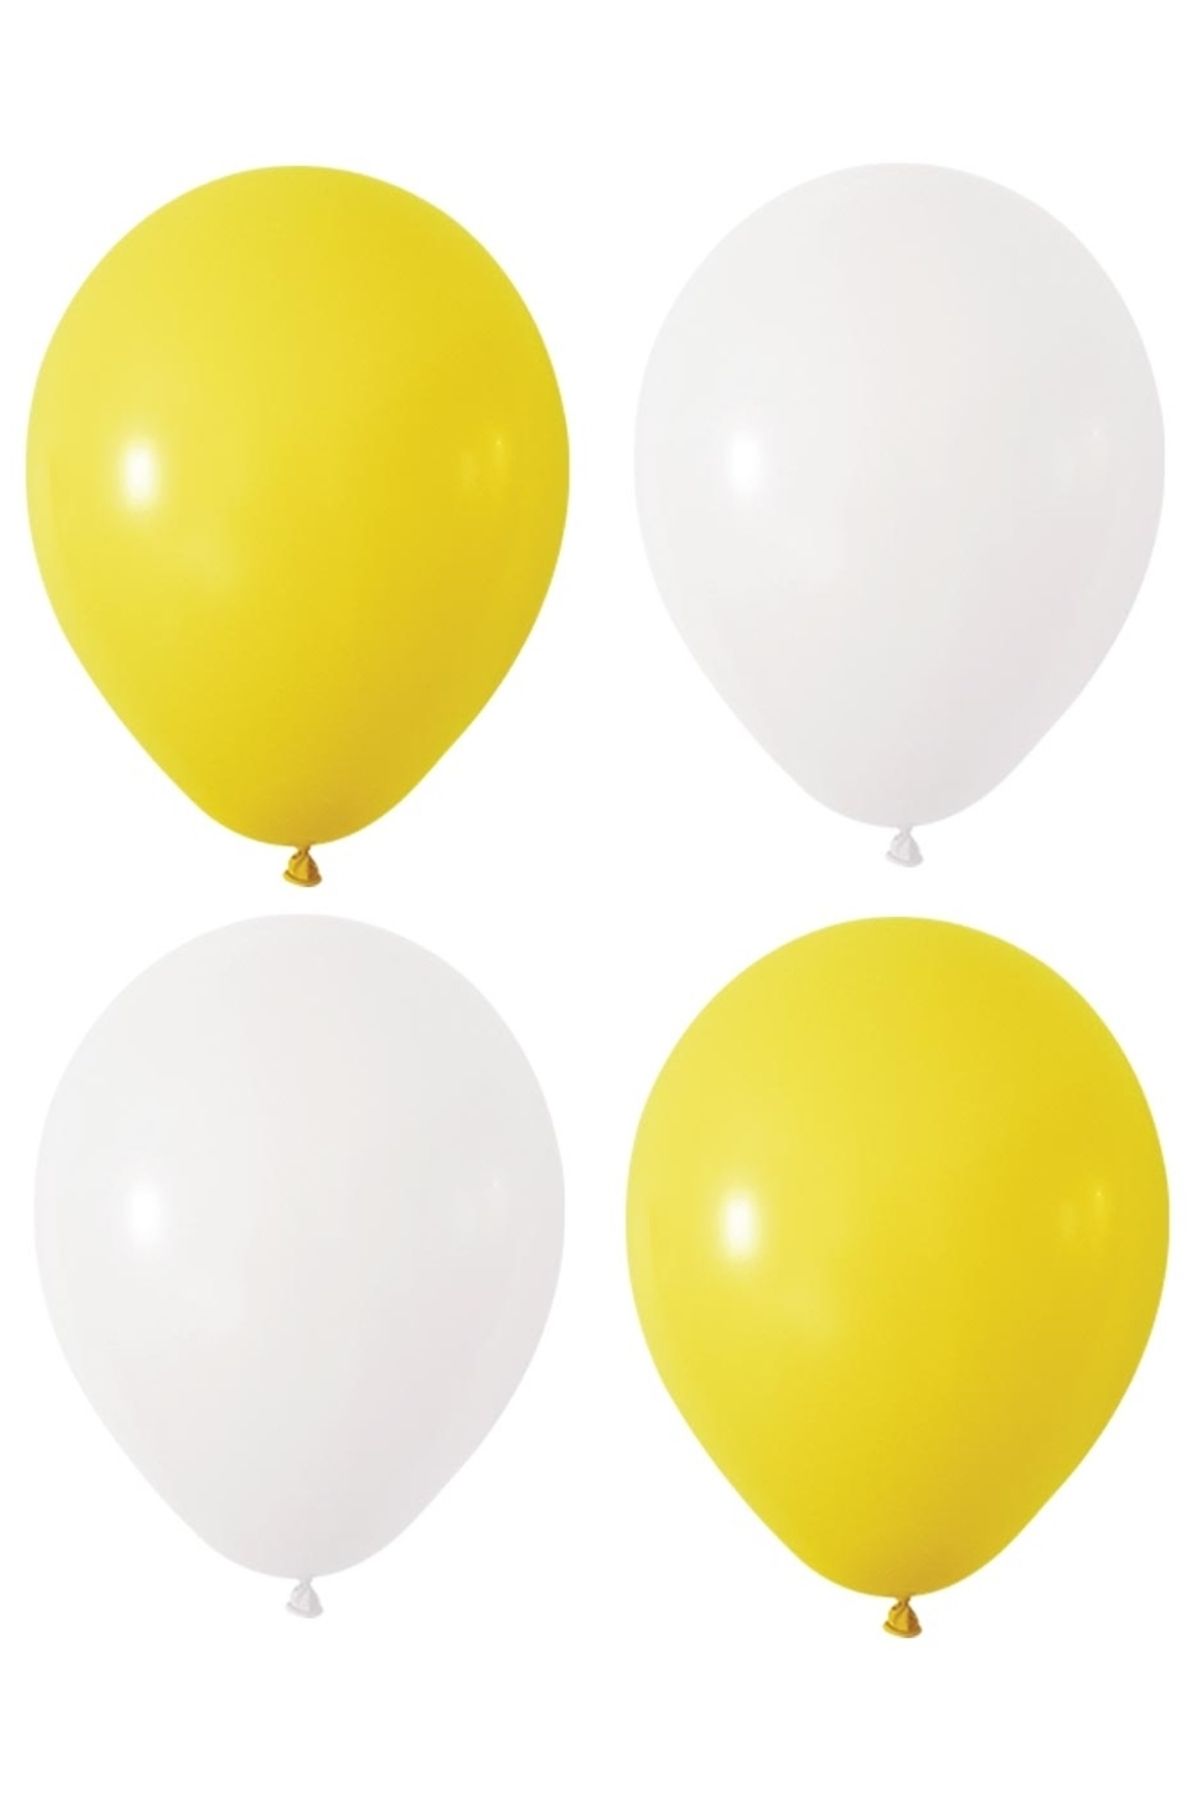 HKNYS Sarı Beyaz Renk Pastel Lateks Balon 15 Adet